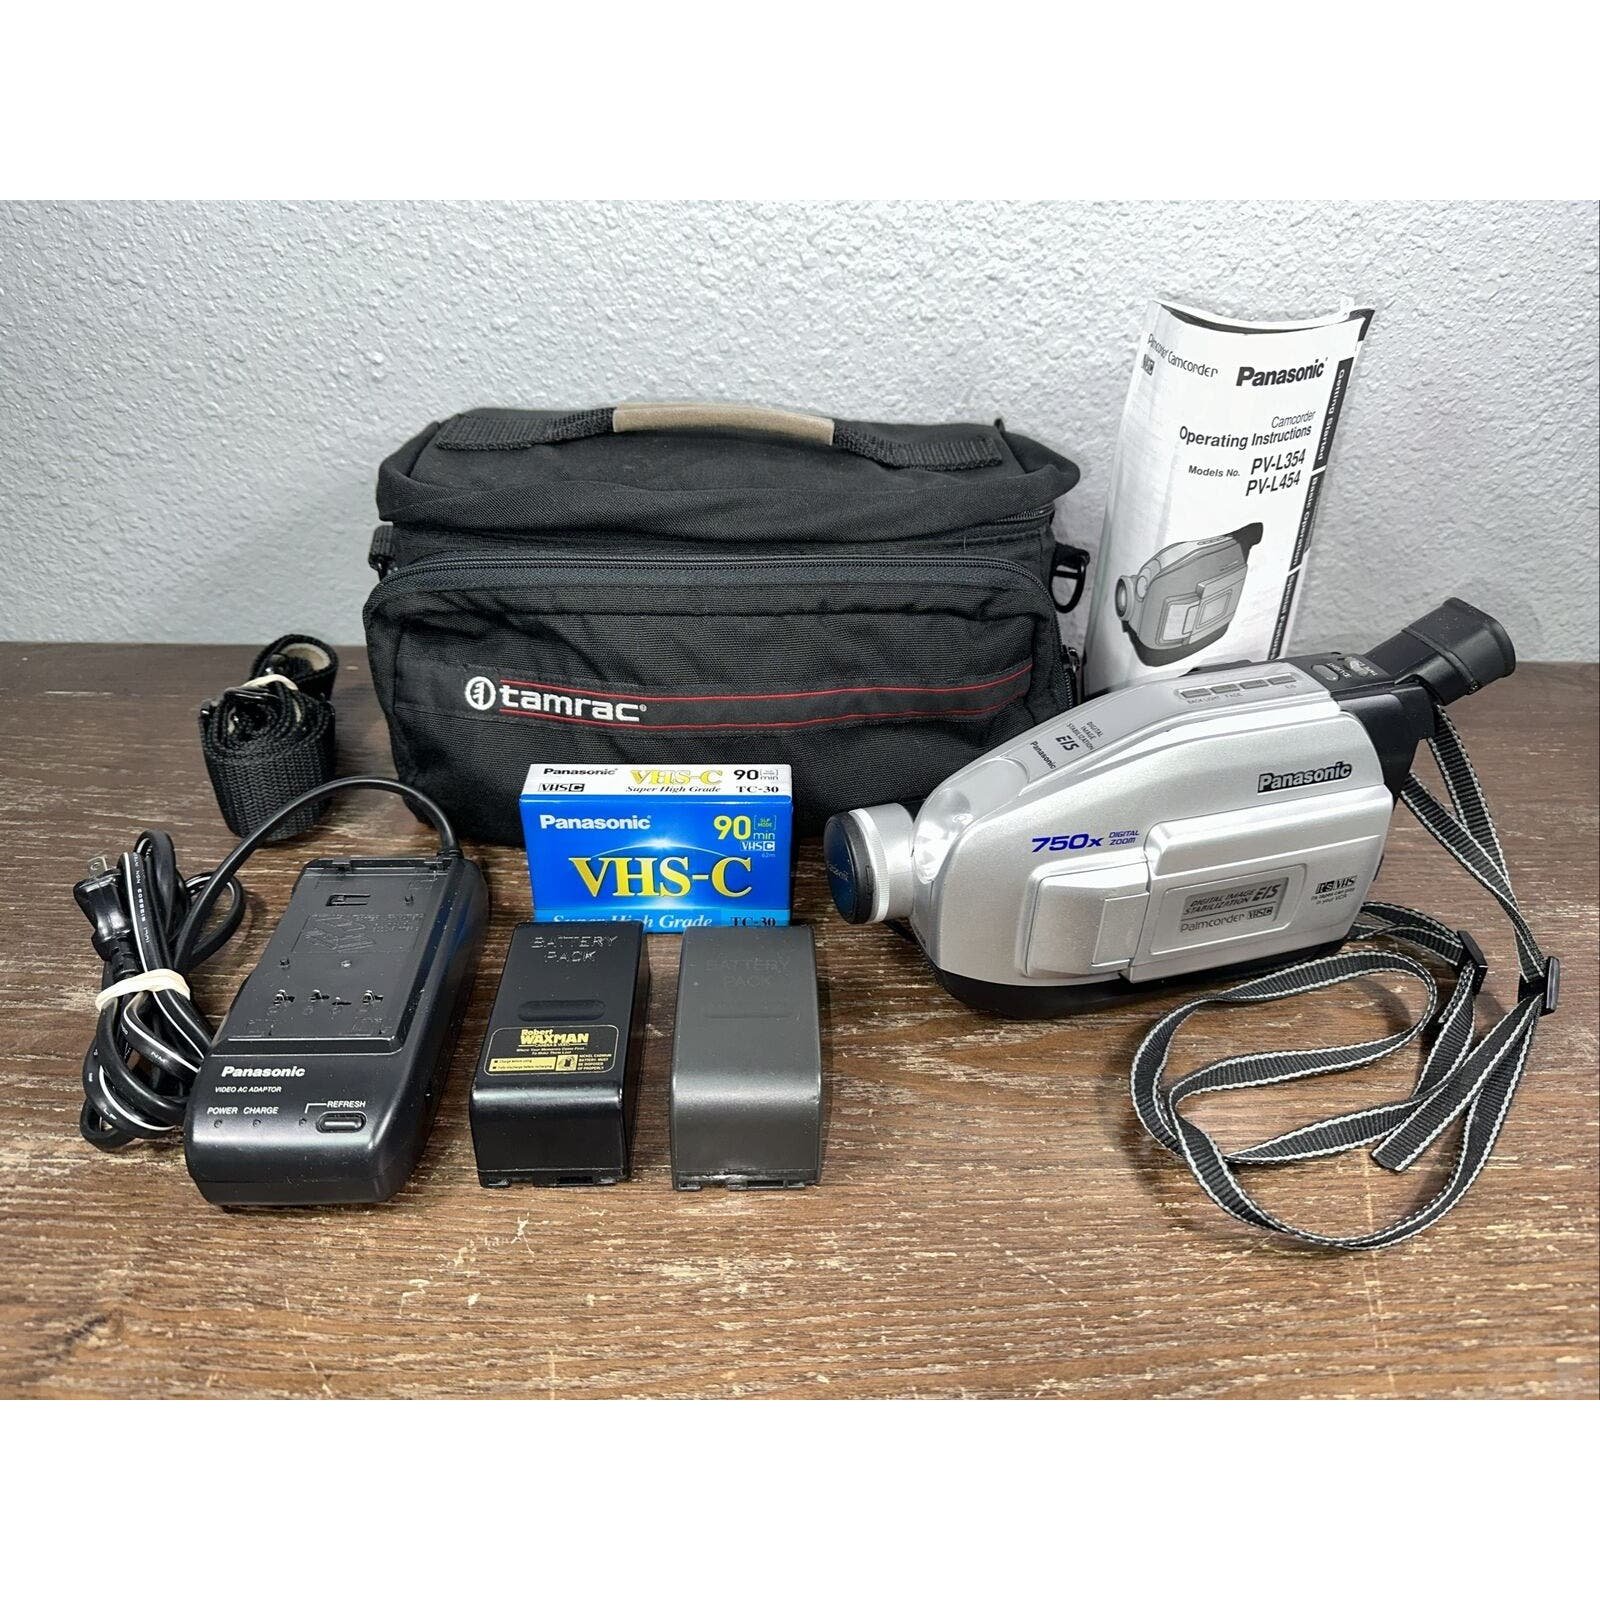 Panasonic Palmcorder PV-L454D w Camera Bag Batteries Charger Power Cord & Manual I2lVVzWGI